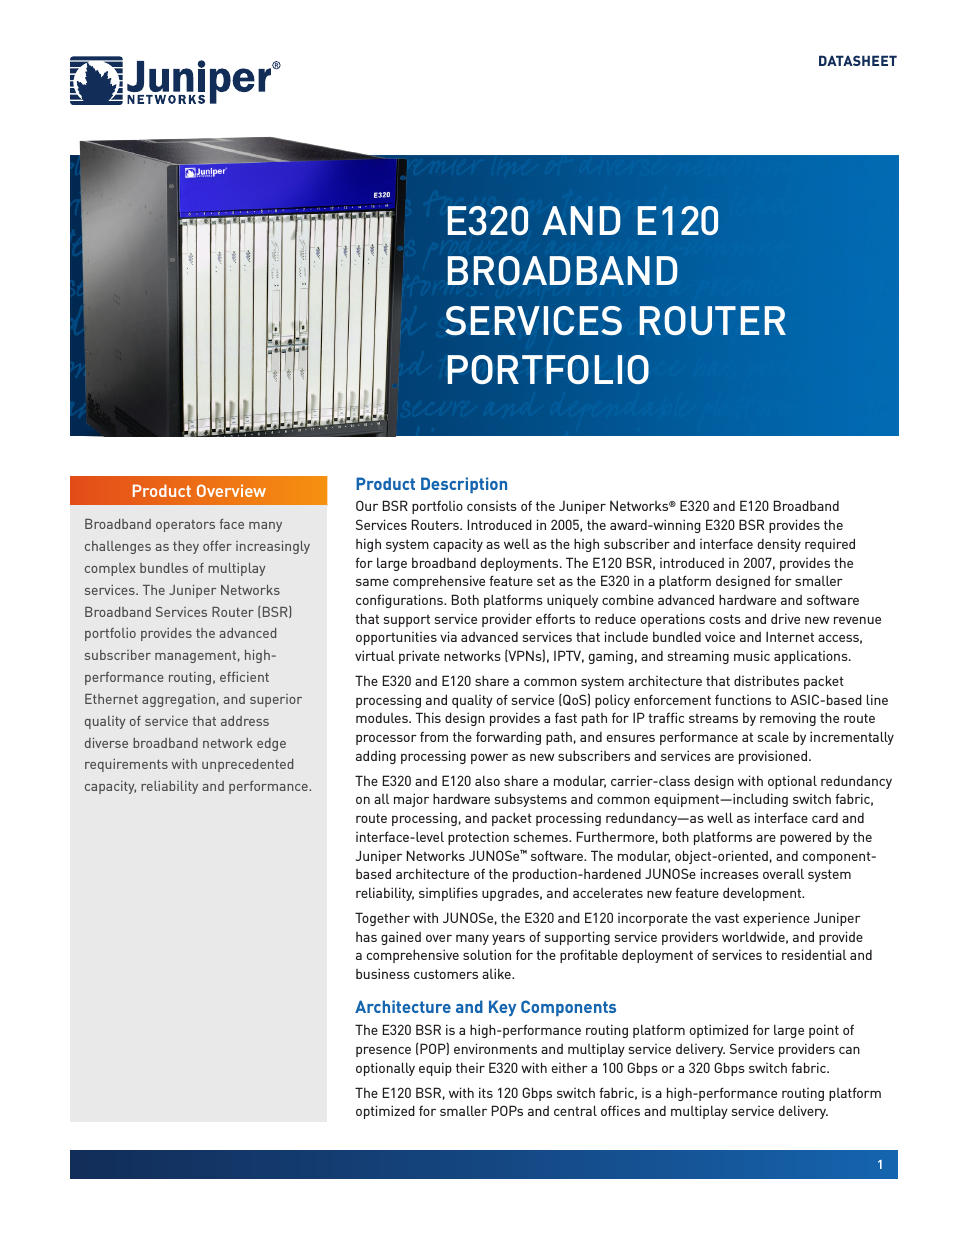 Broadband Services Router. E120